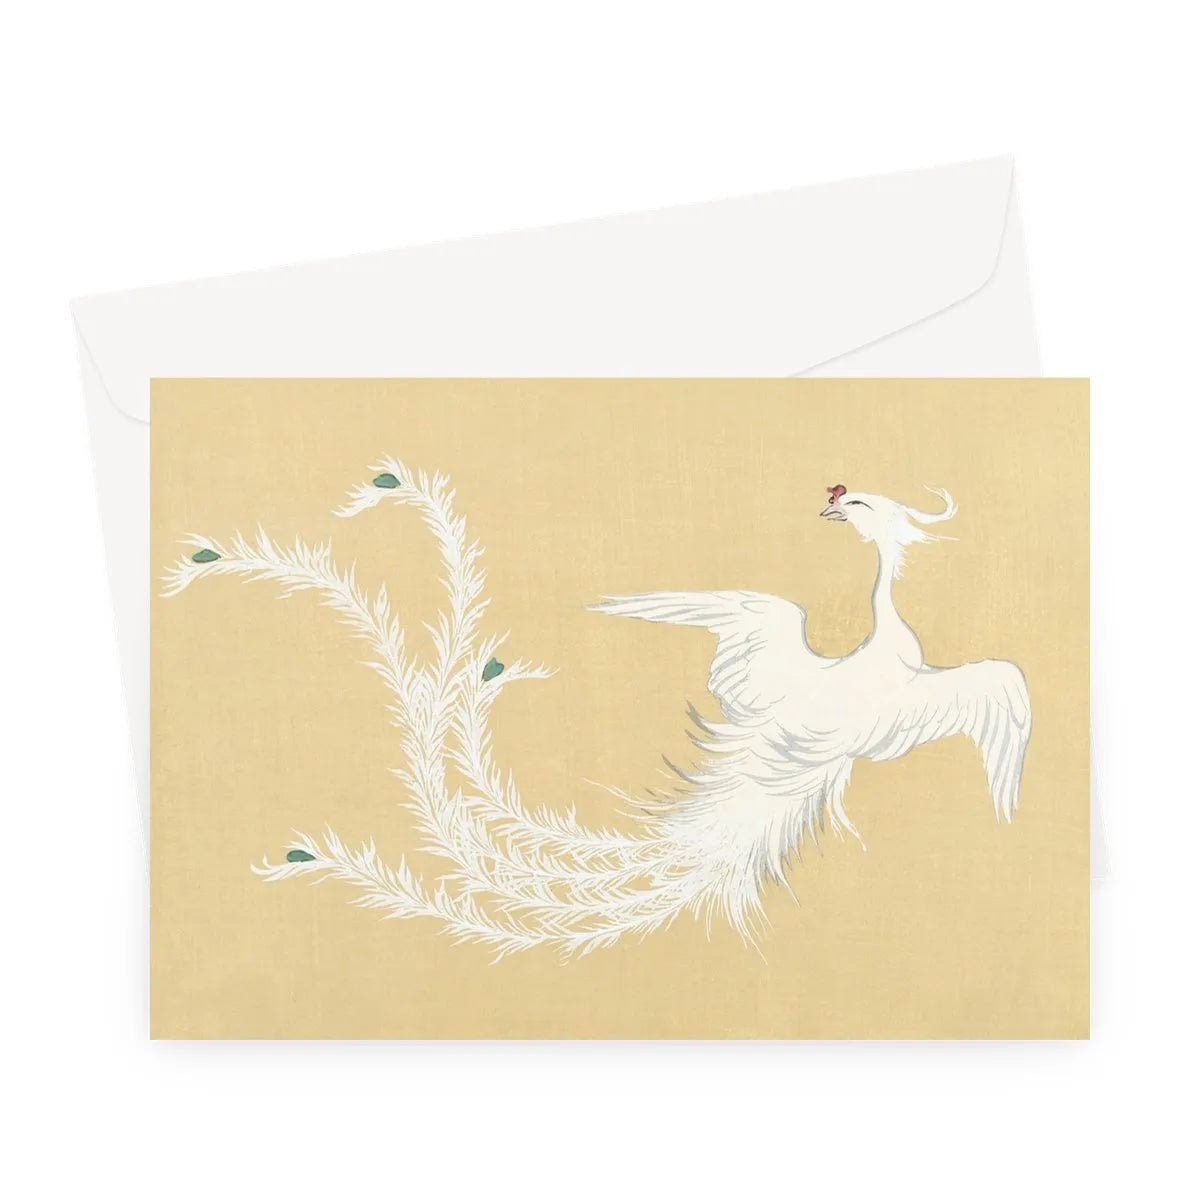 Phoenix By Kamisaka Sekka Greeting Card - A5 Landscape / 1 Card - Notebooks & Notepads - Aesthetic Art